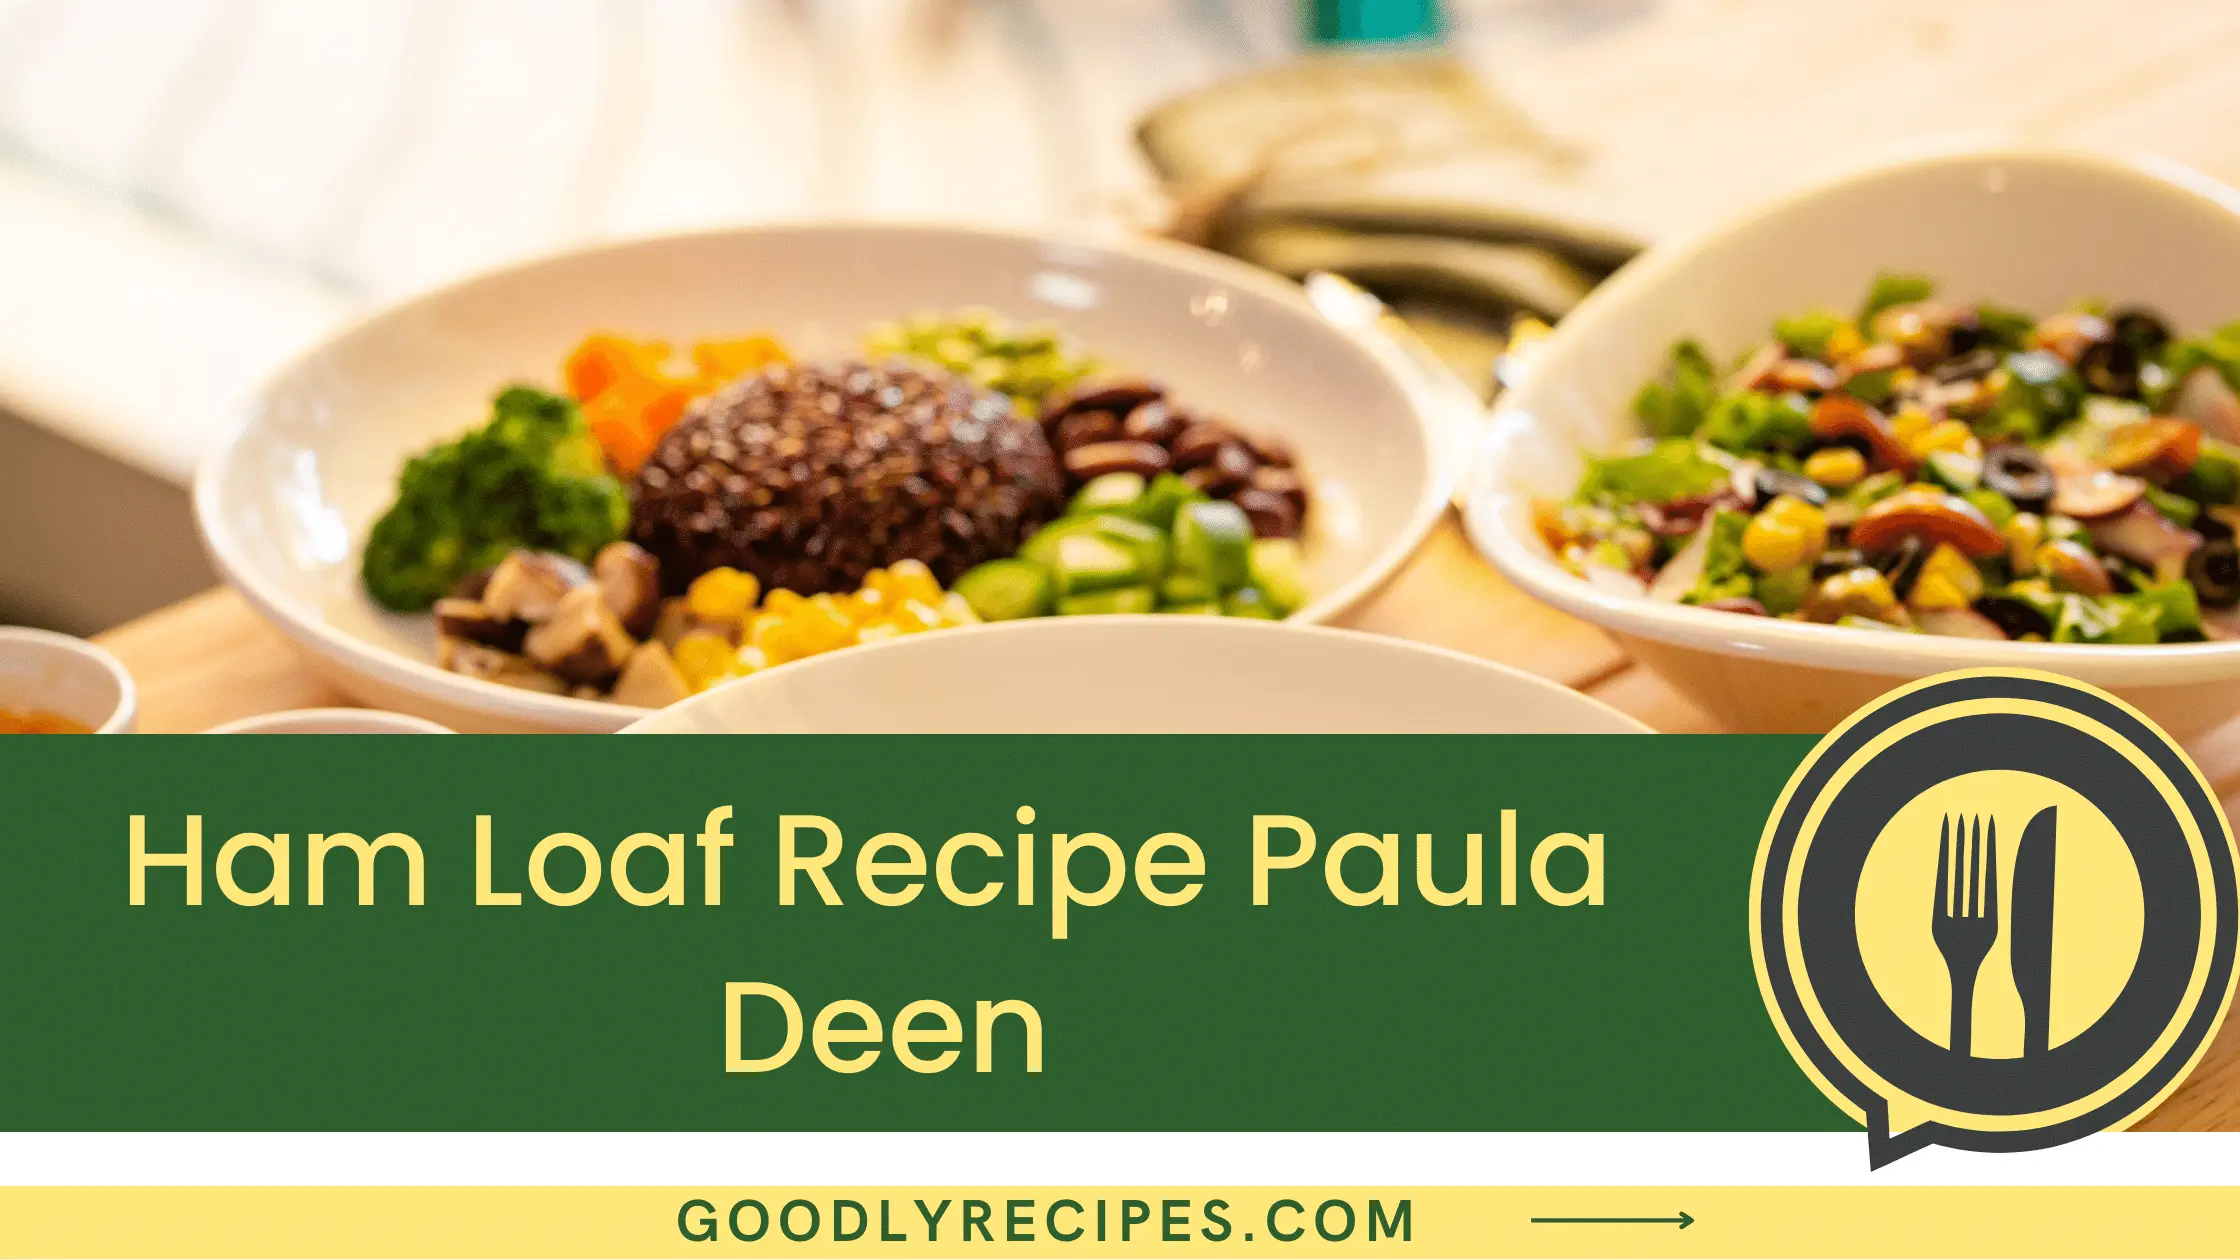 Ham Loaf Recipe Paula Deen - For Food Lovers